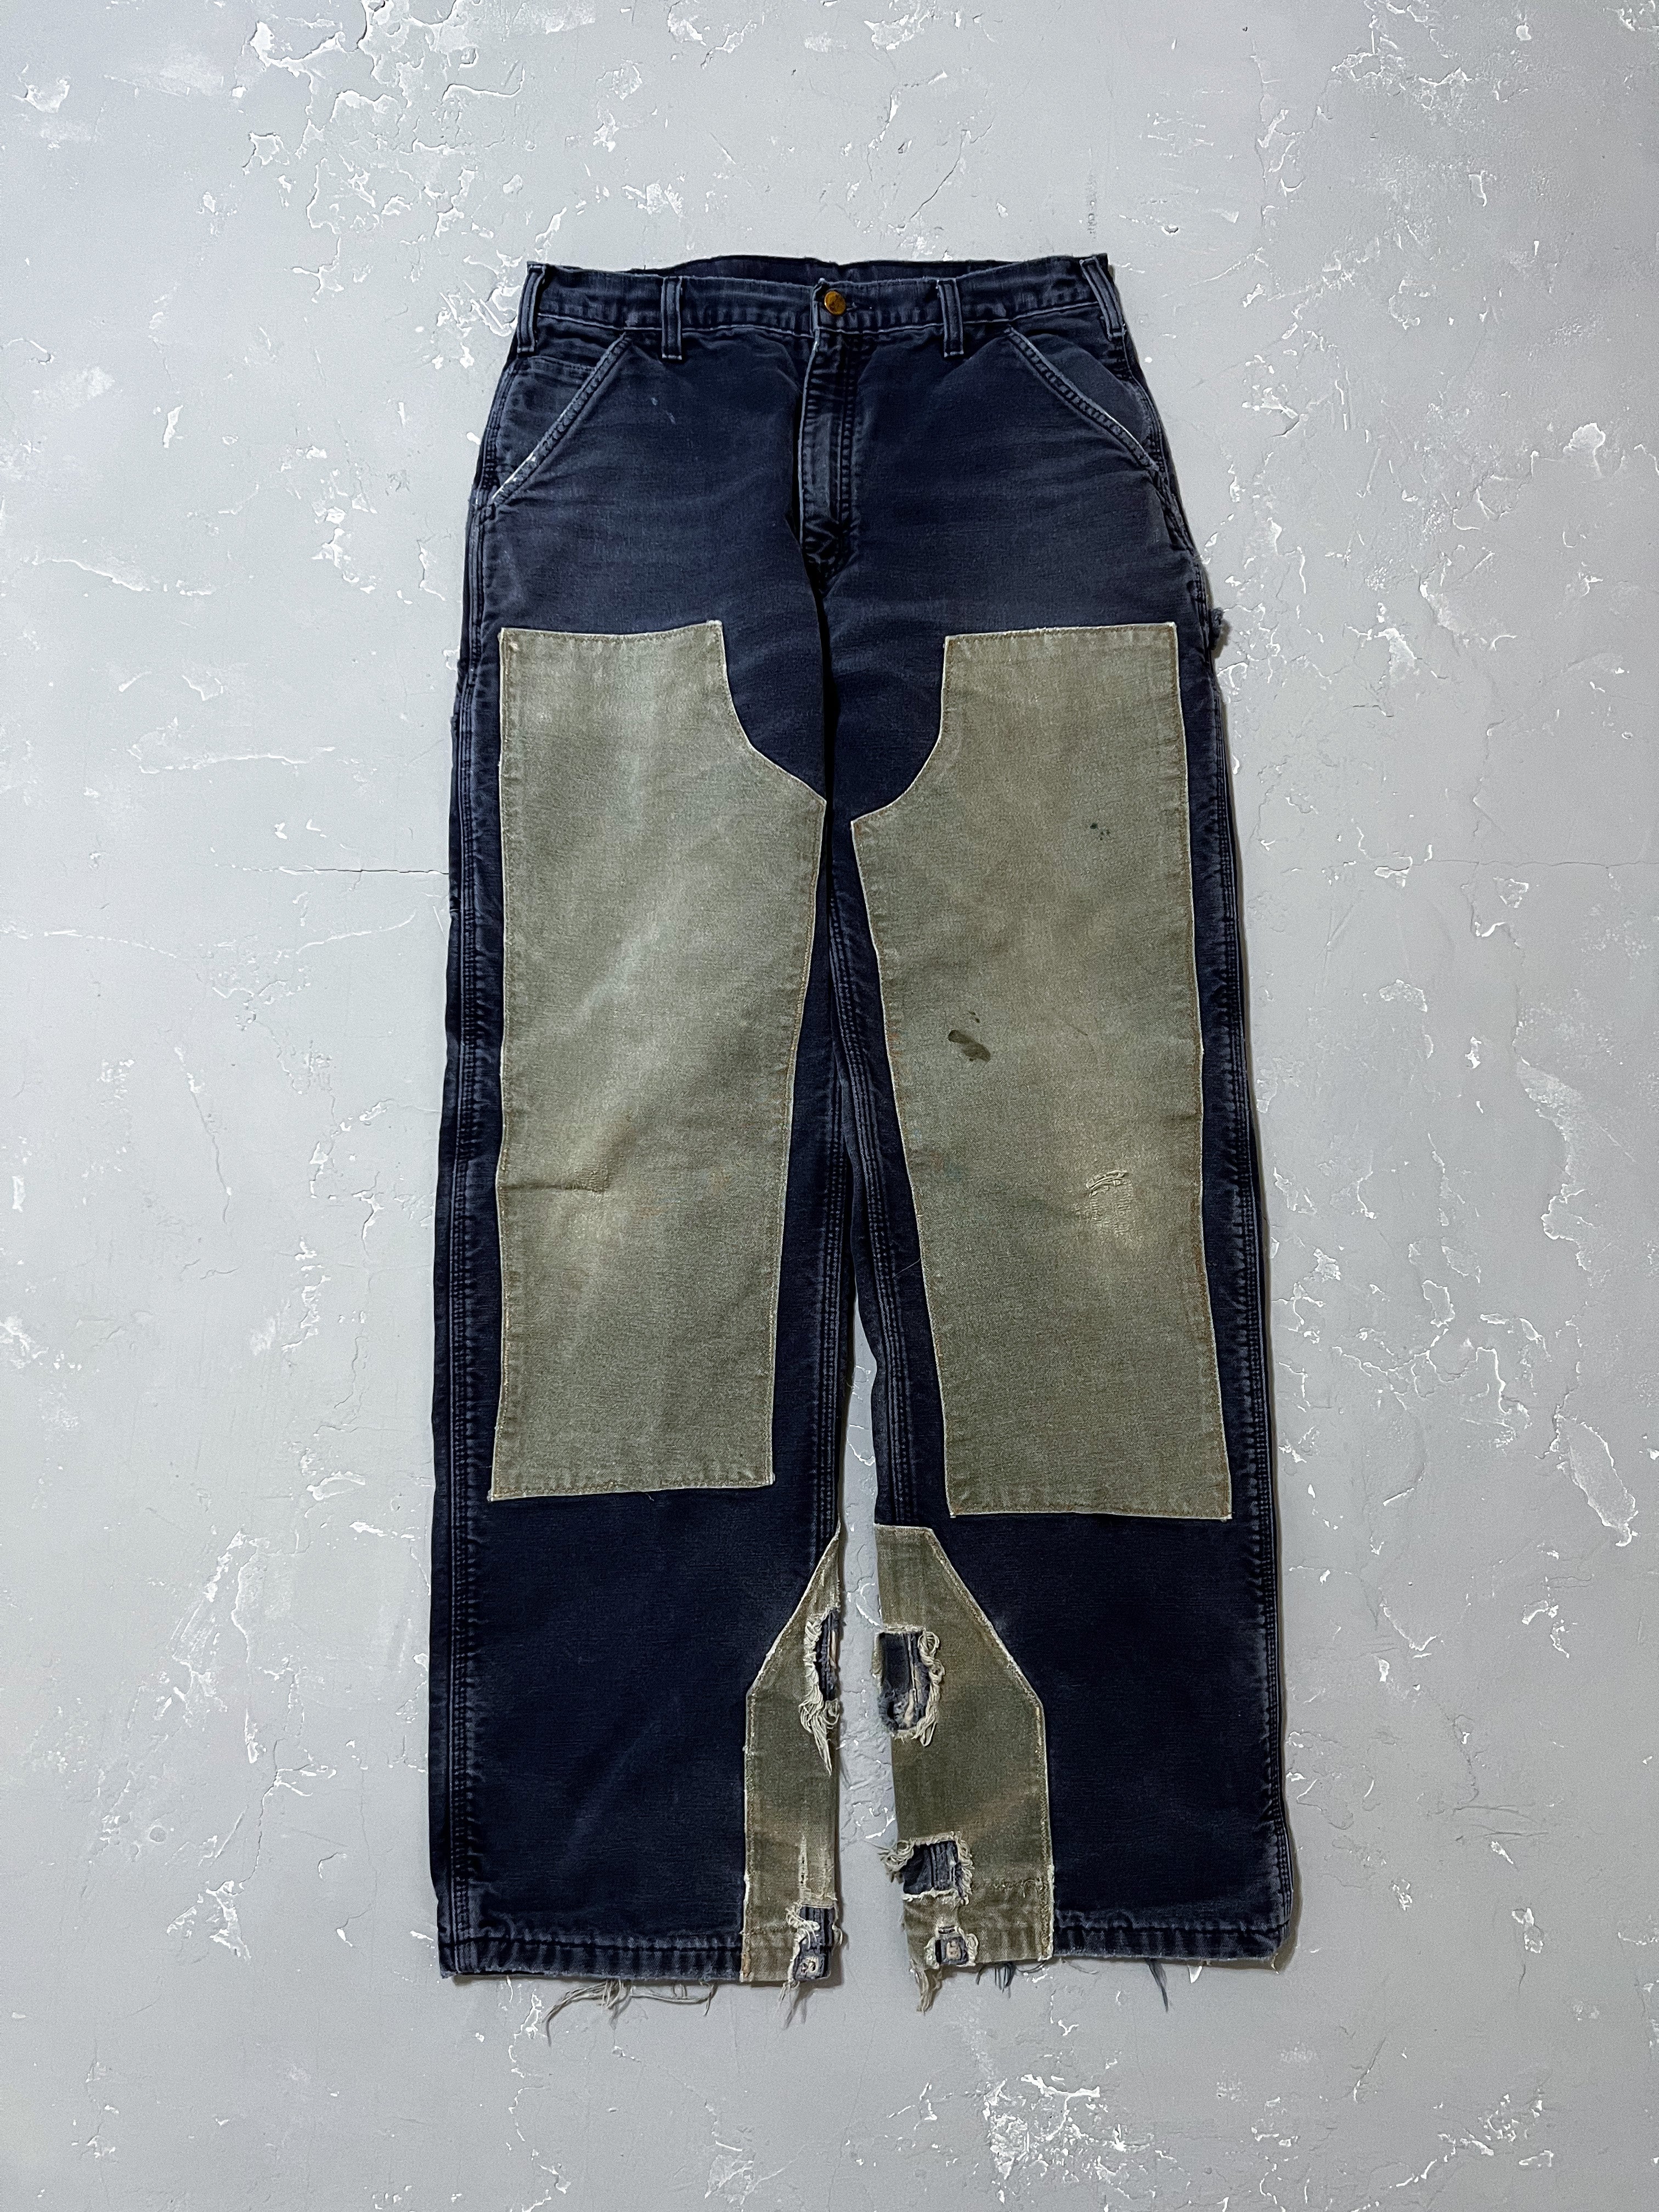 Carhartt Custom Double Knee Pants [32 x 34]